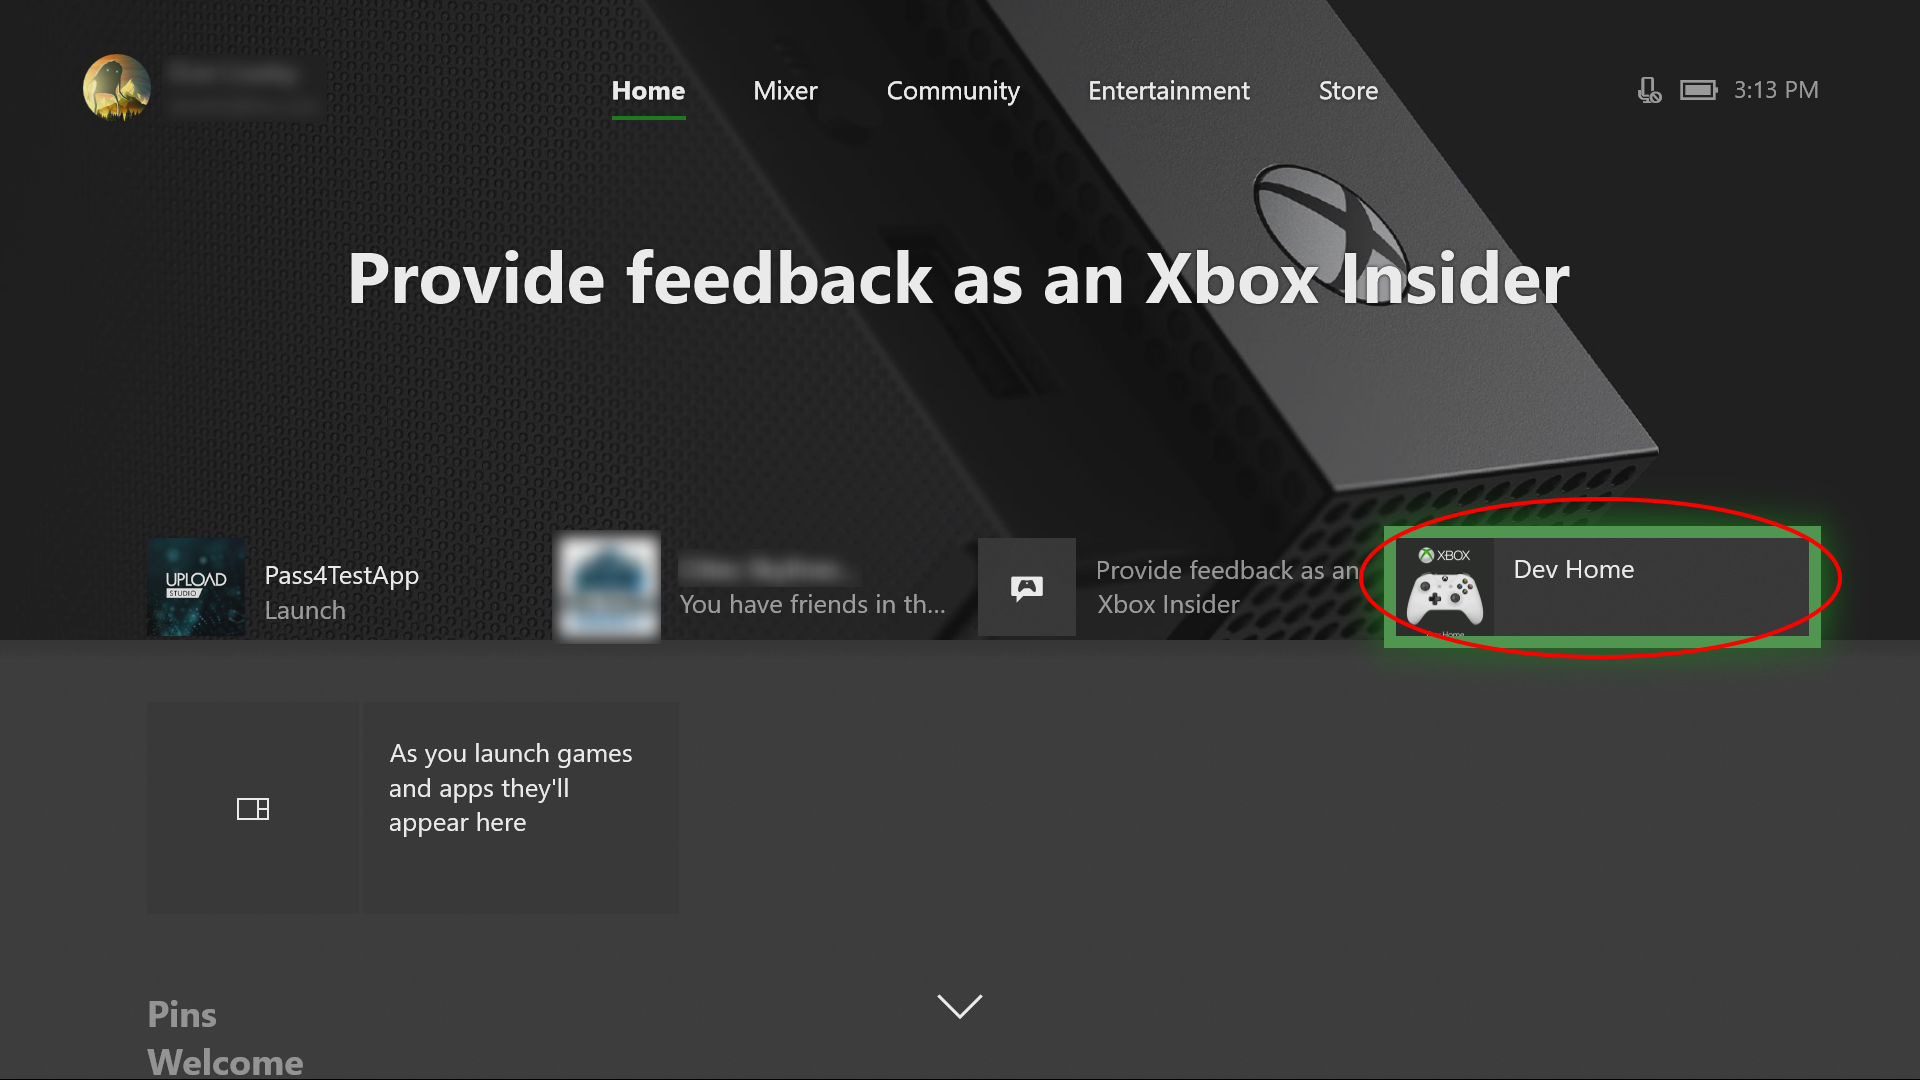 Xbox Live service status page.